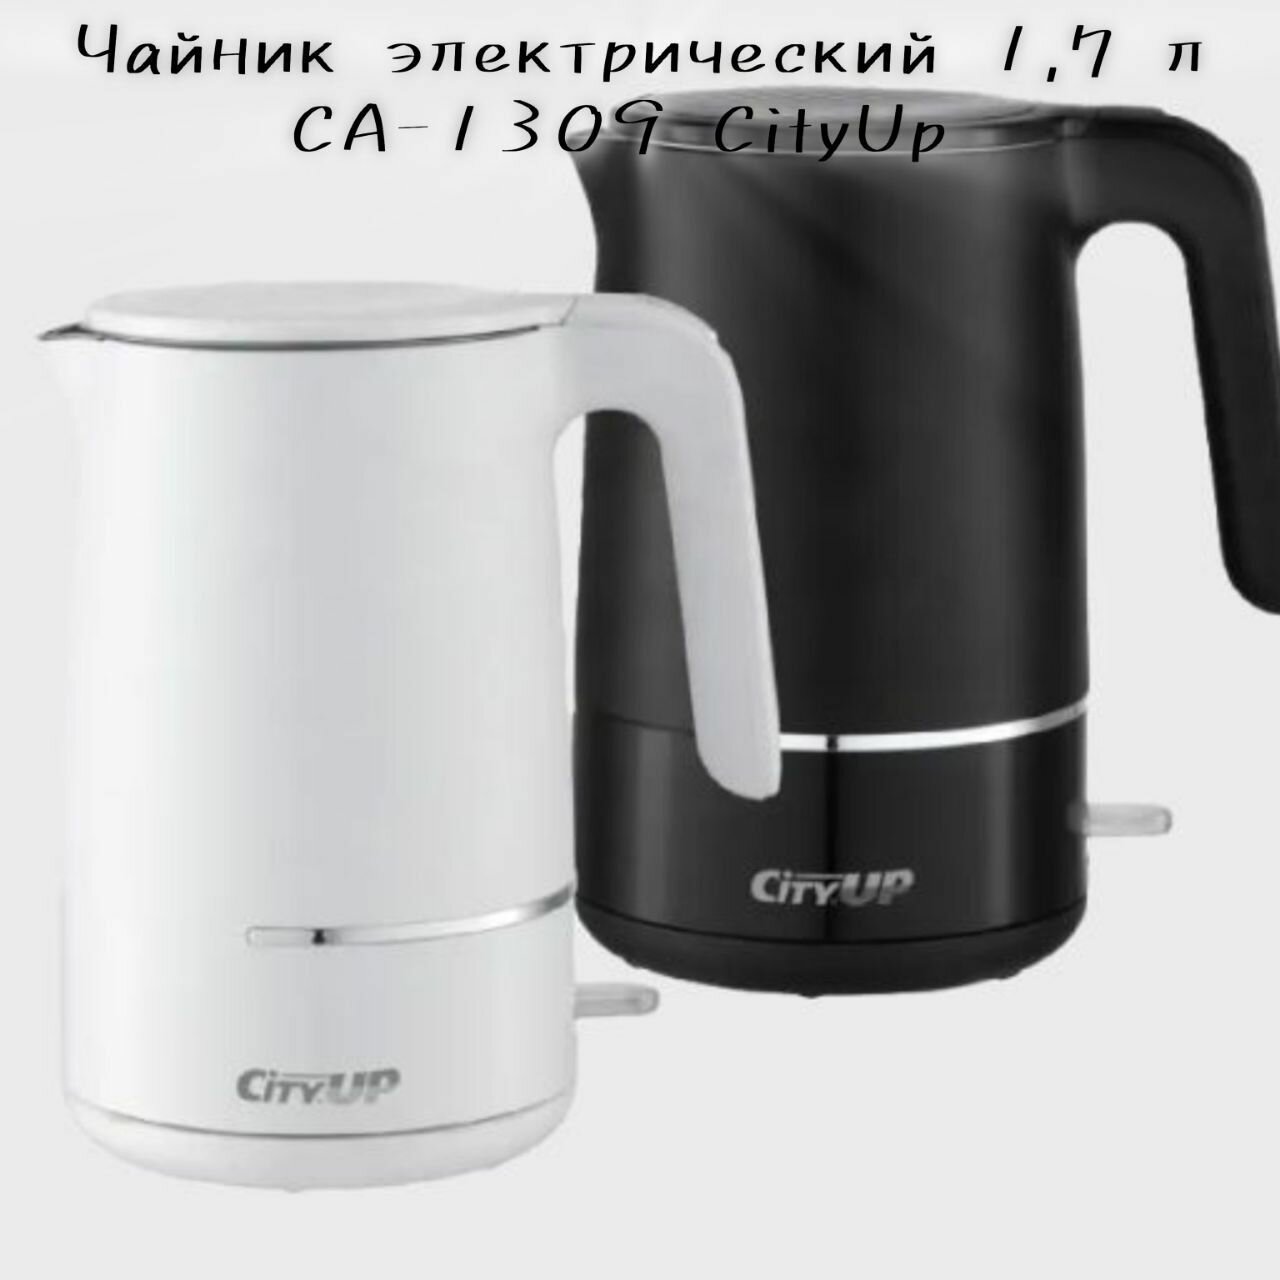 Чайник электрический, 1,7л СА-1309 CityUp